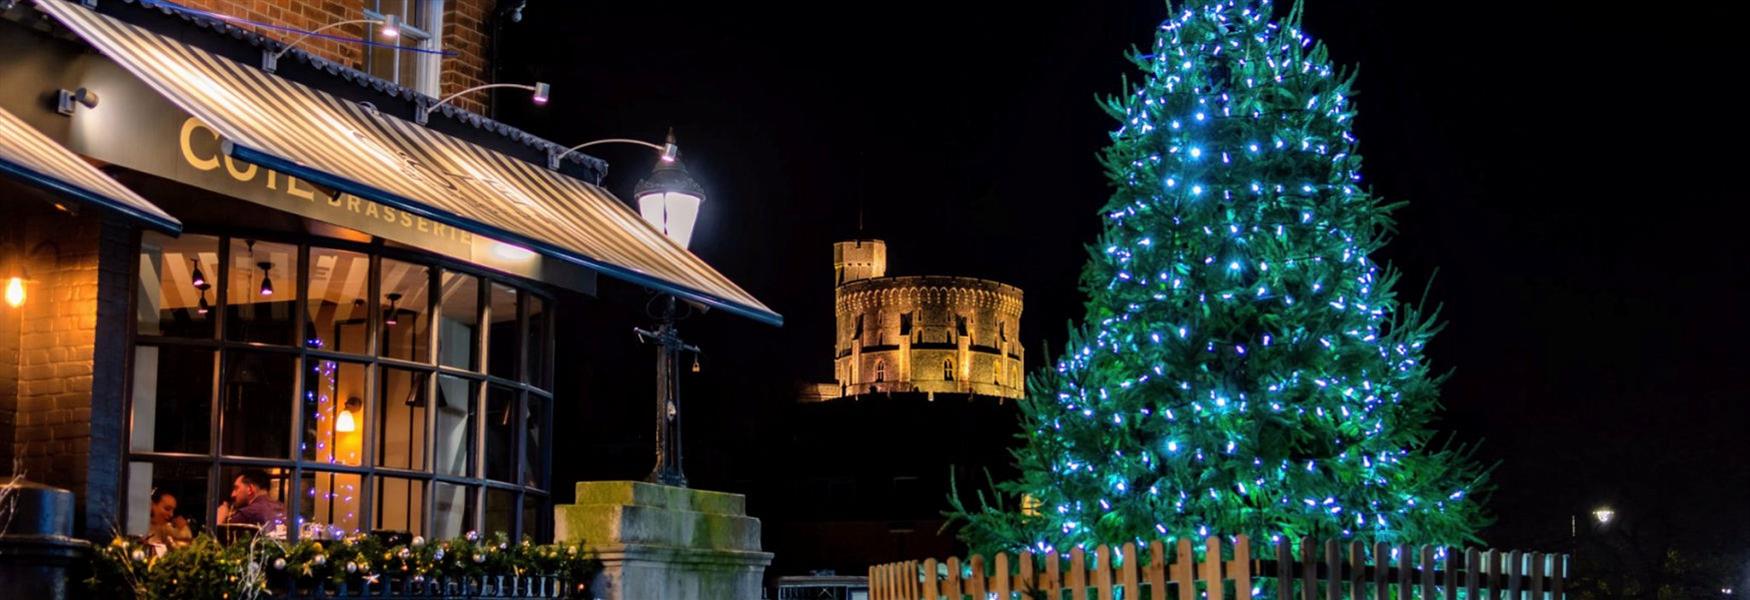 Windsor Castle Round Tower, Eton Christmas Tree, Cote Brasserie